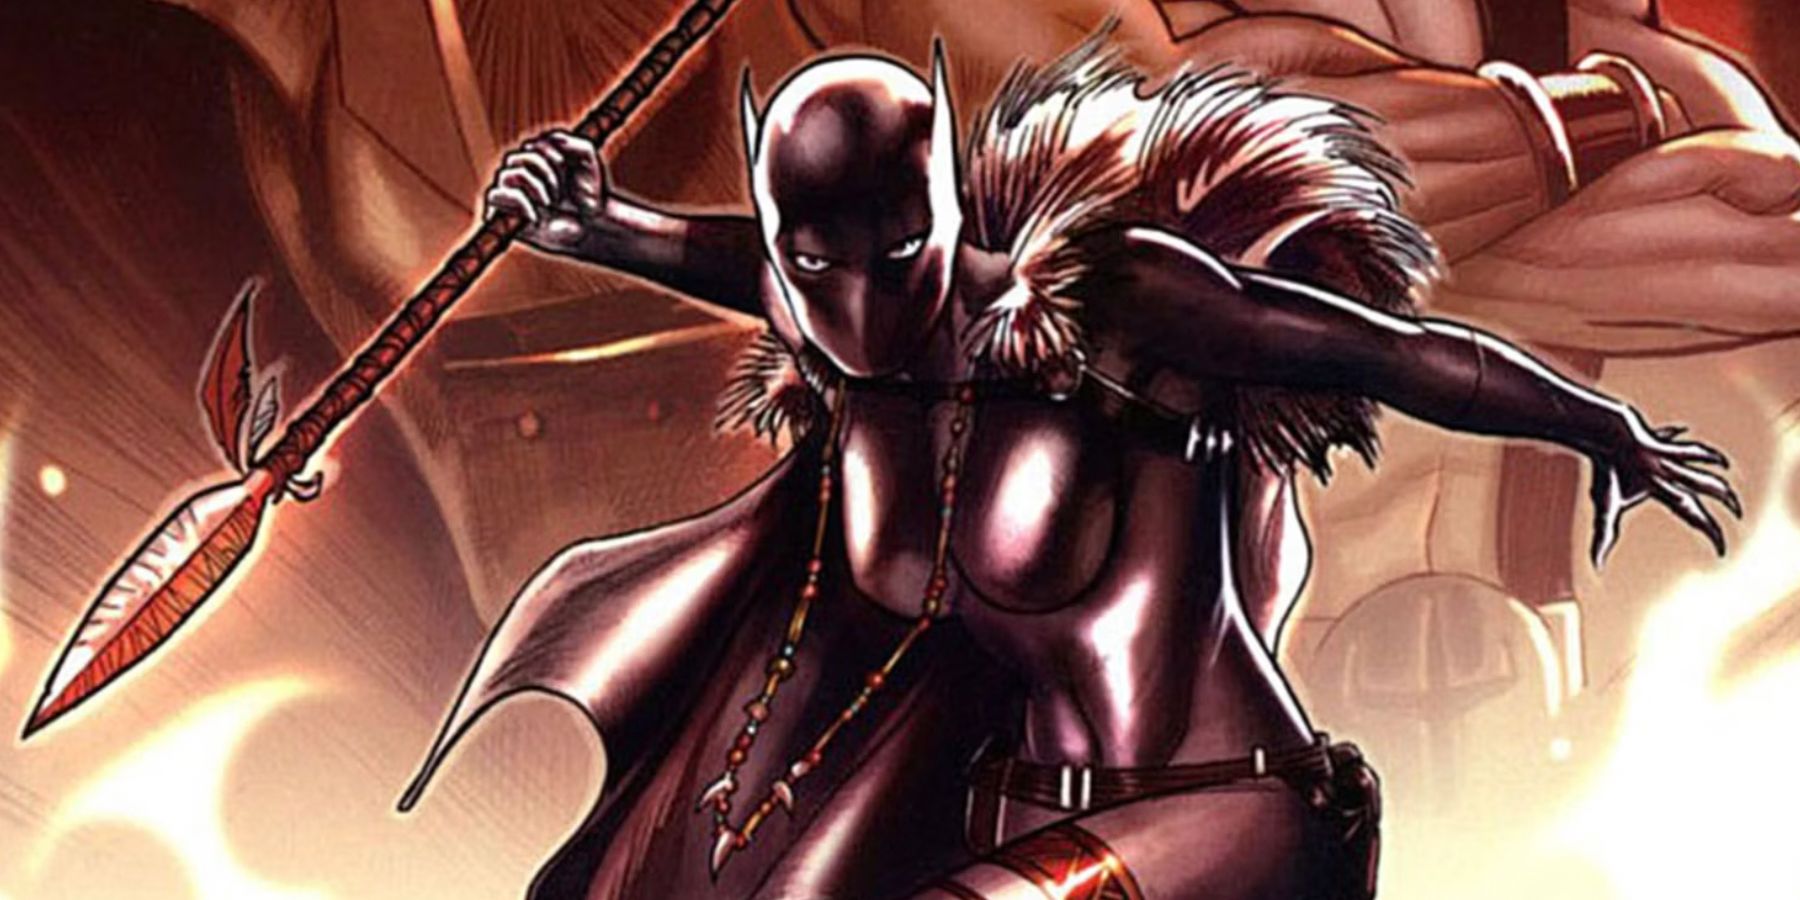 Shuri in her Black Panther garb in Marvel comics